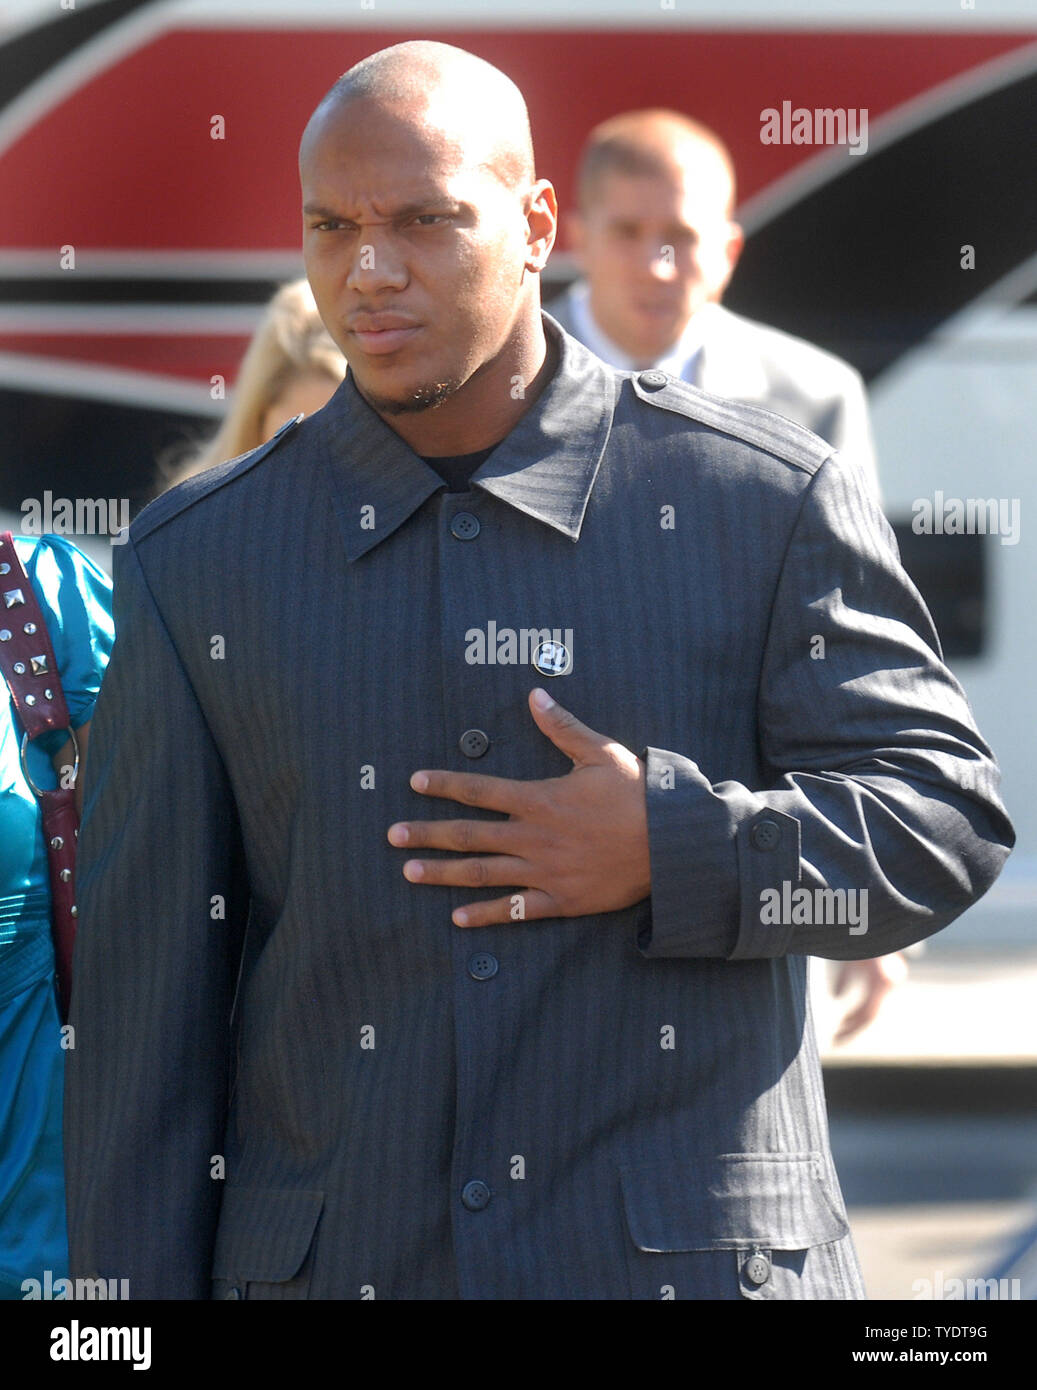 Photo: Washington Redskins' Sean Taylor funeral in Miami - WAX20071203705 